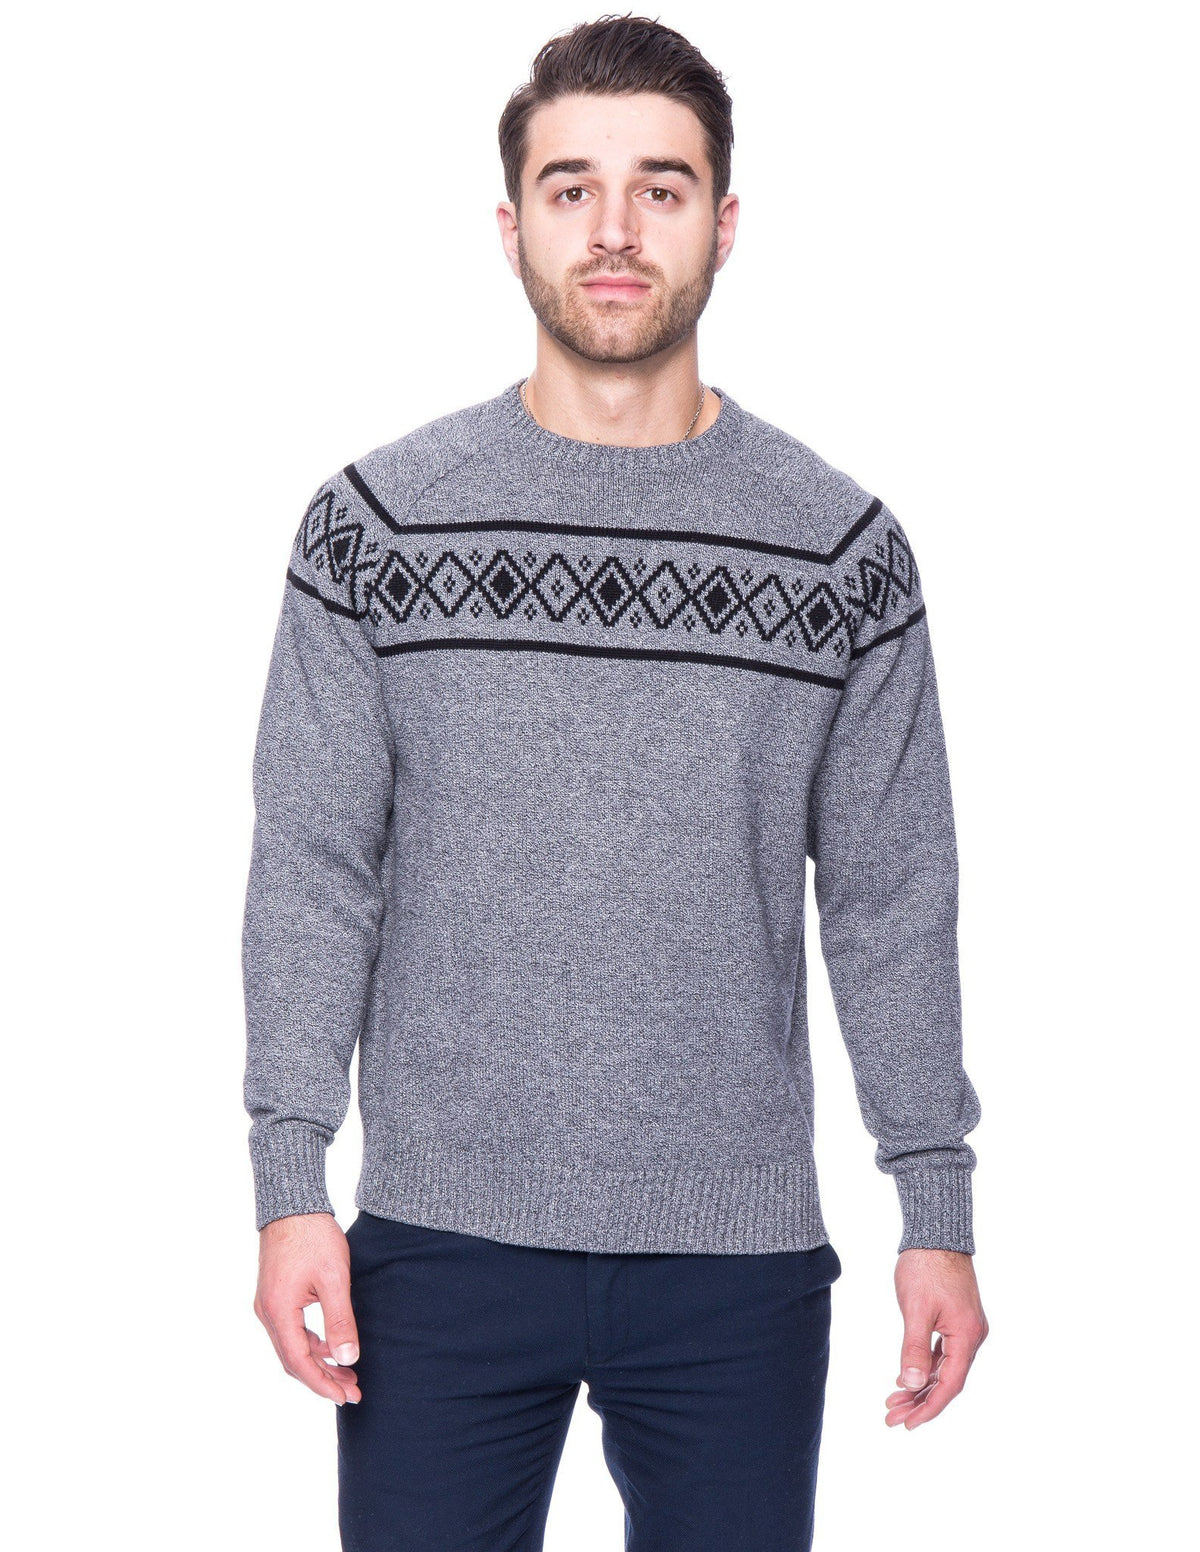 Men's 100% Cotton Crew Neck Sweater with Fair Isle Stripe - Marl Black/White